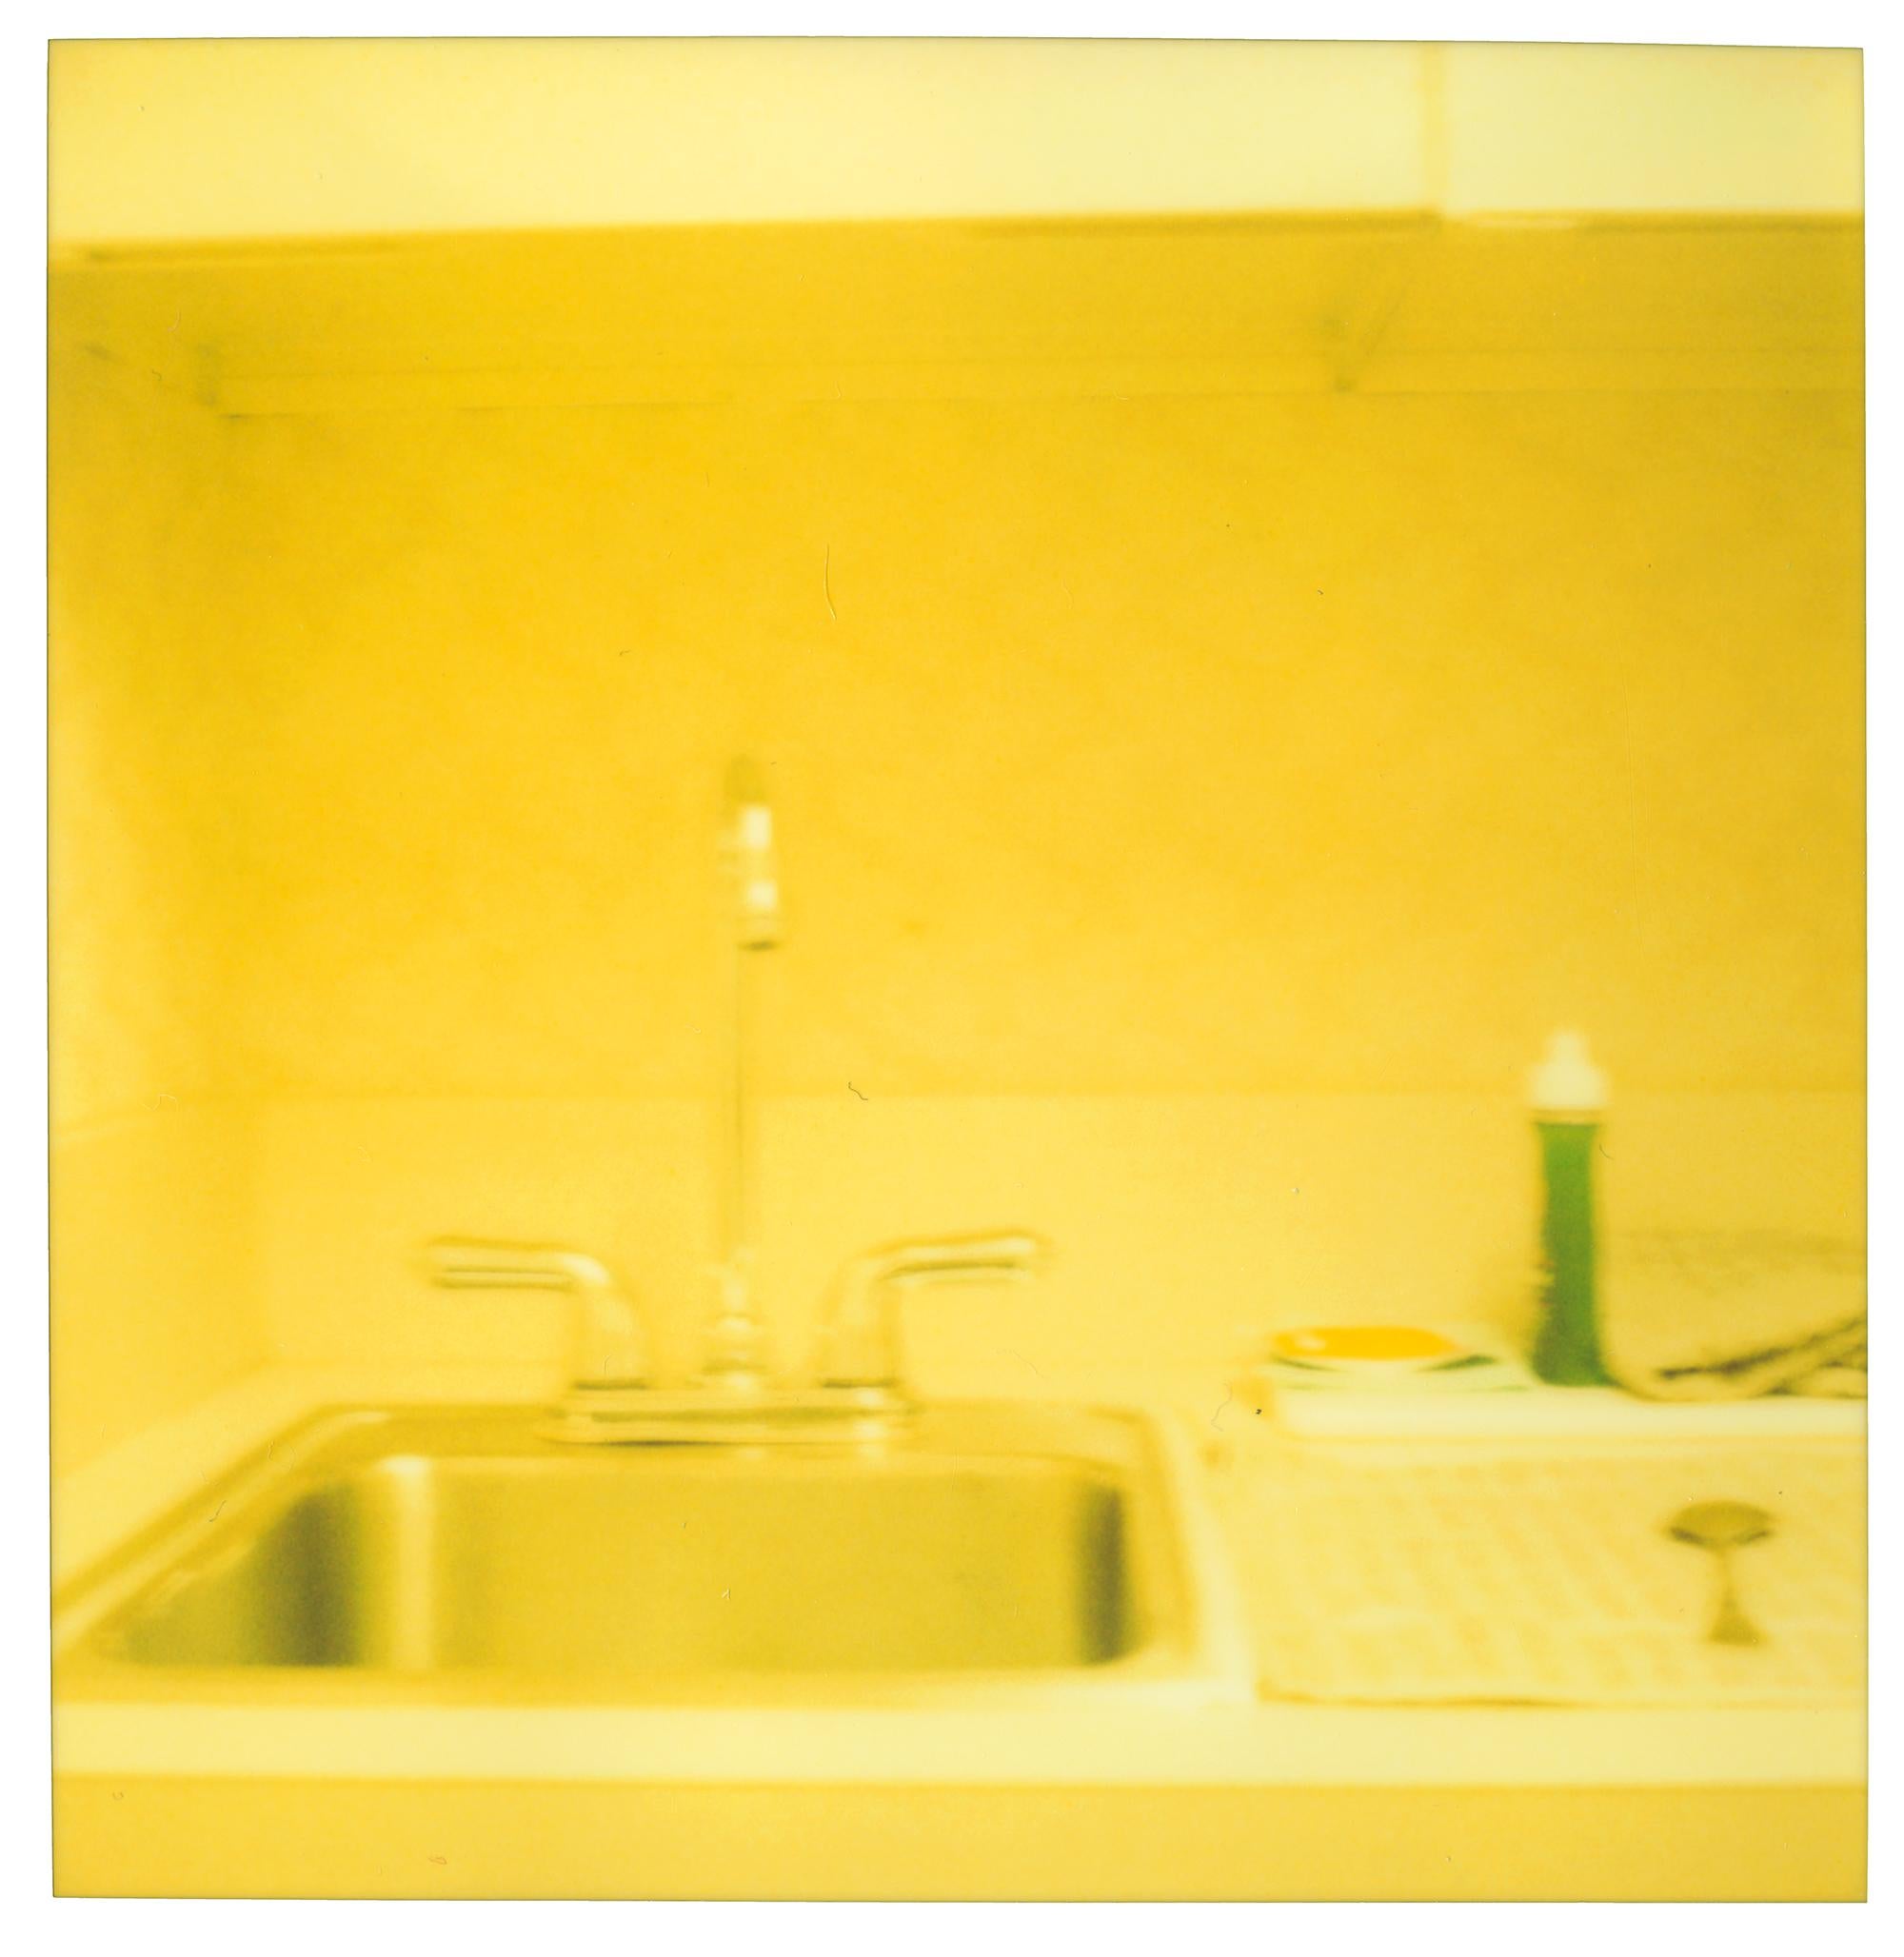 Shelbourne Hotel - Strange Love, 4 pieces, 100x100cm each - Contemporary Photograph by Stefanie Schneider